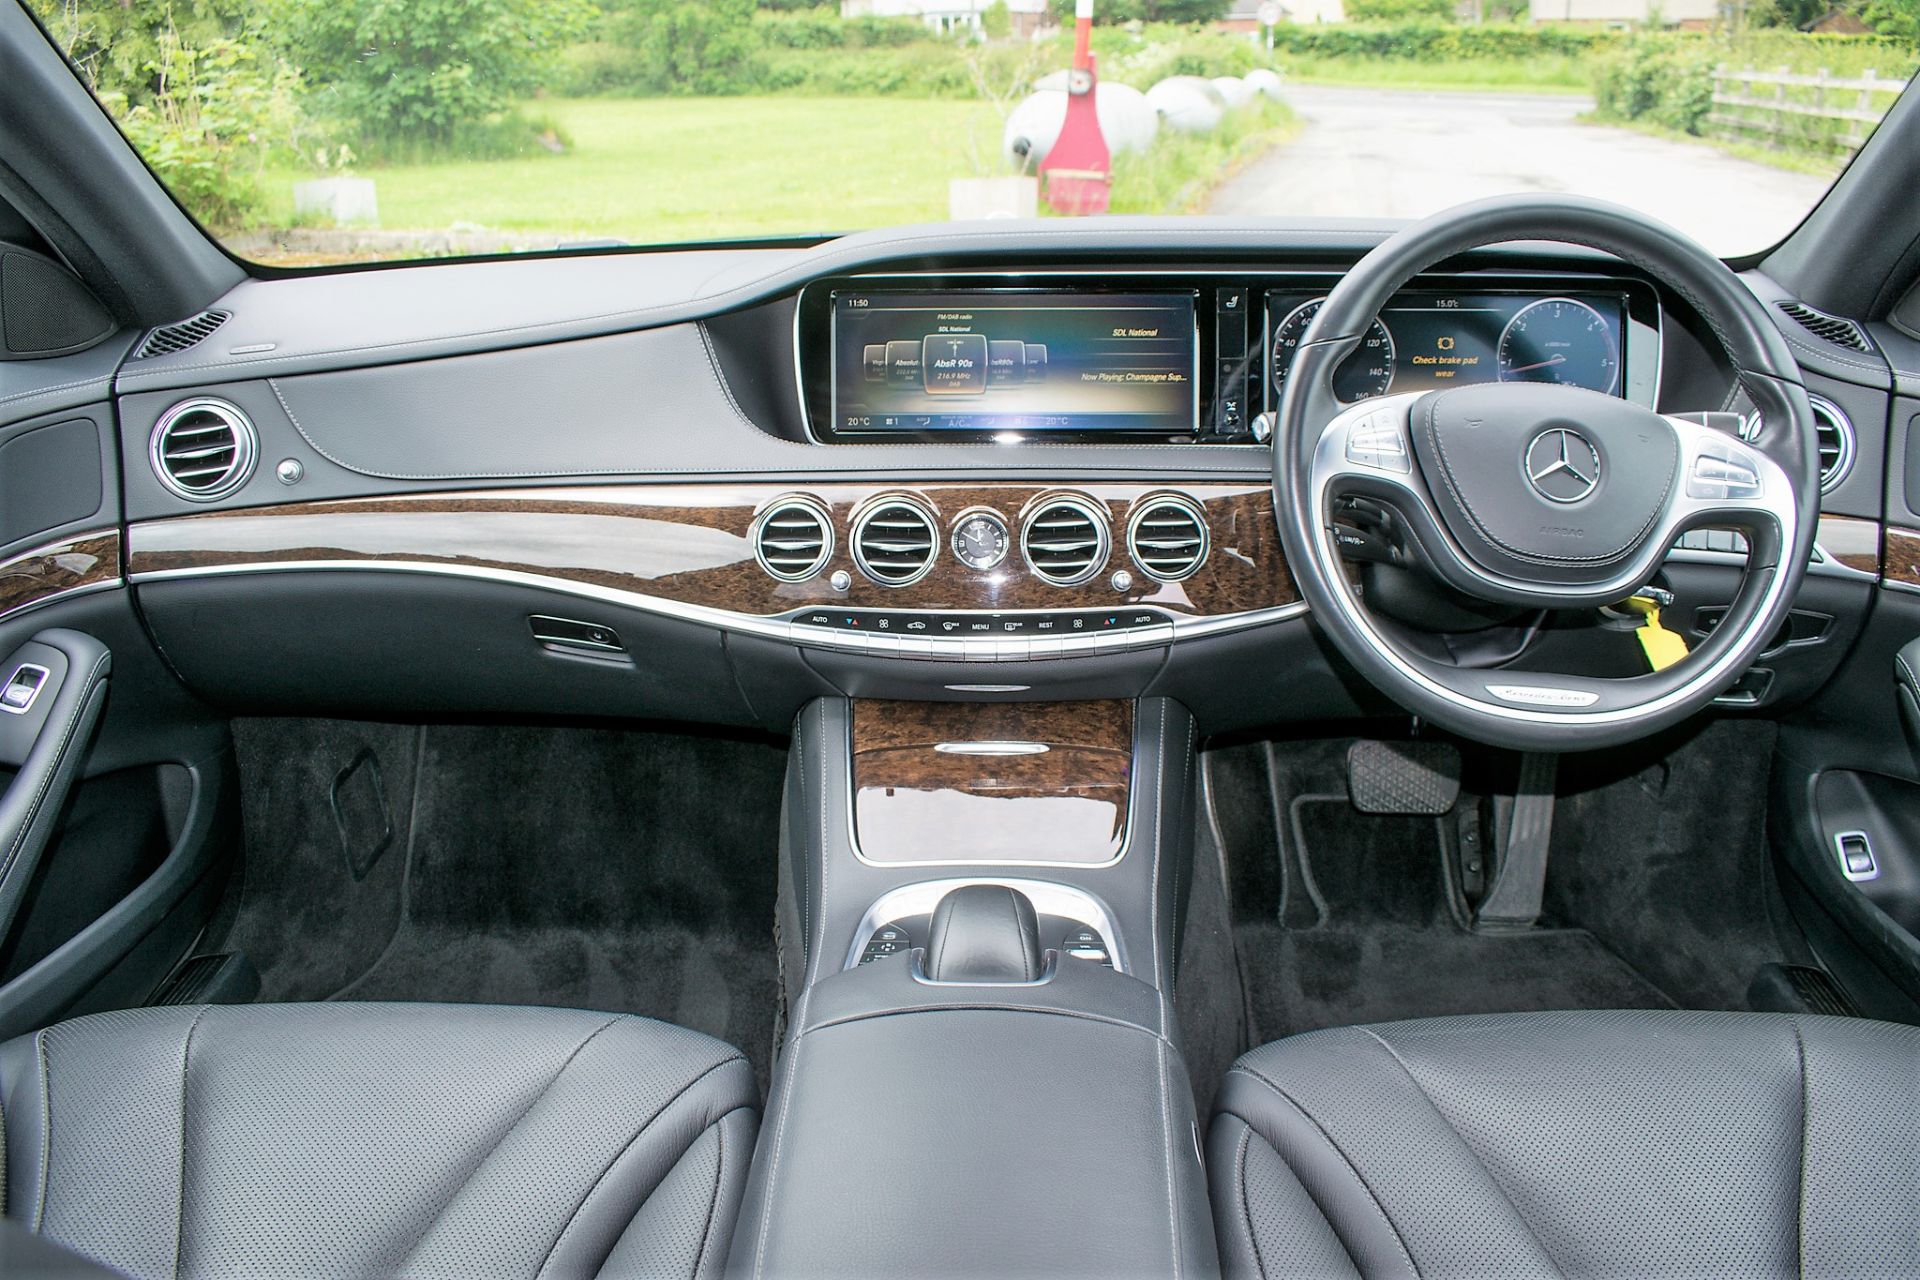 Mercedes Benz S350 L SE Line Bluetec 4 door automatic saloon car Registration Number: BU53 LAS - Image 13 of 16